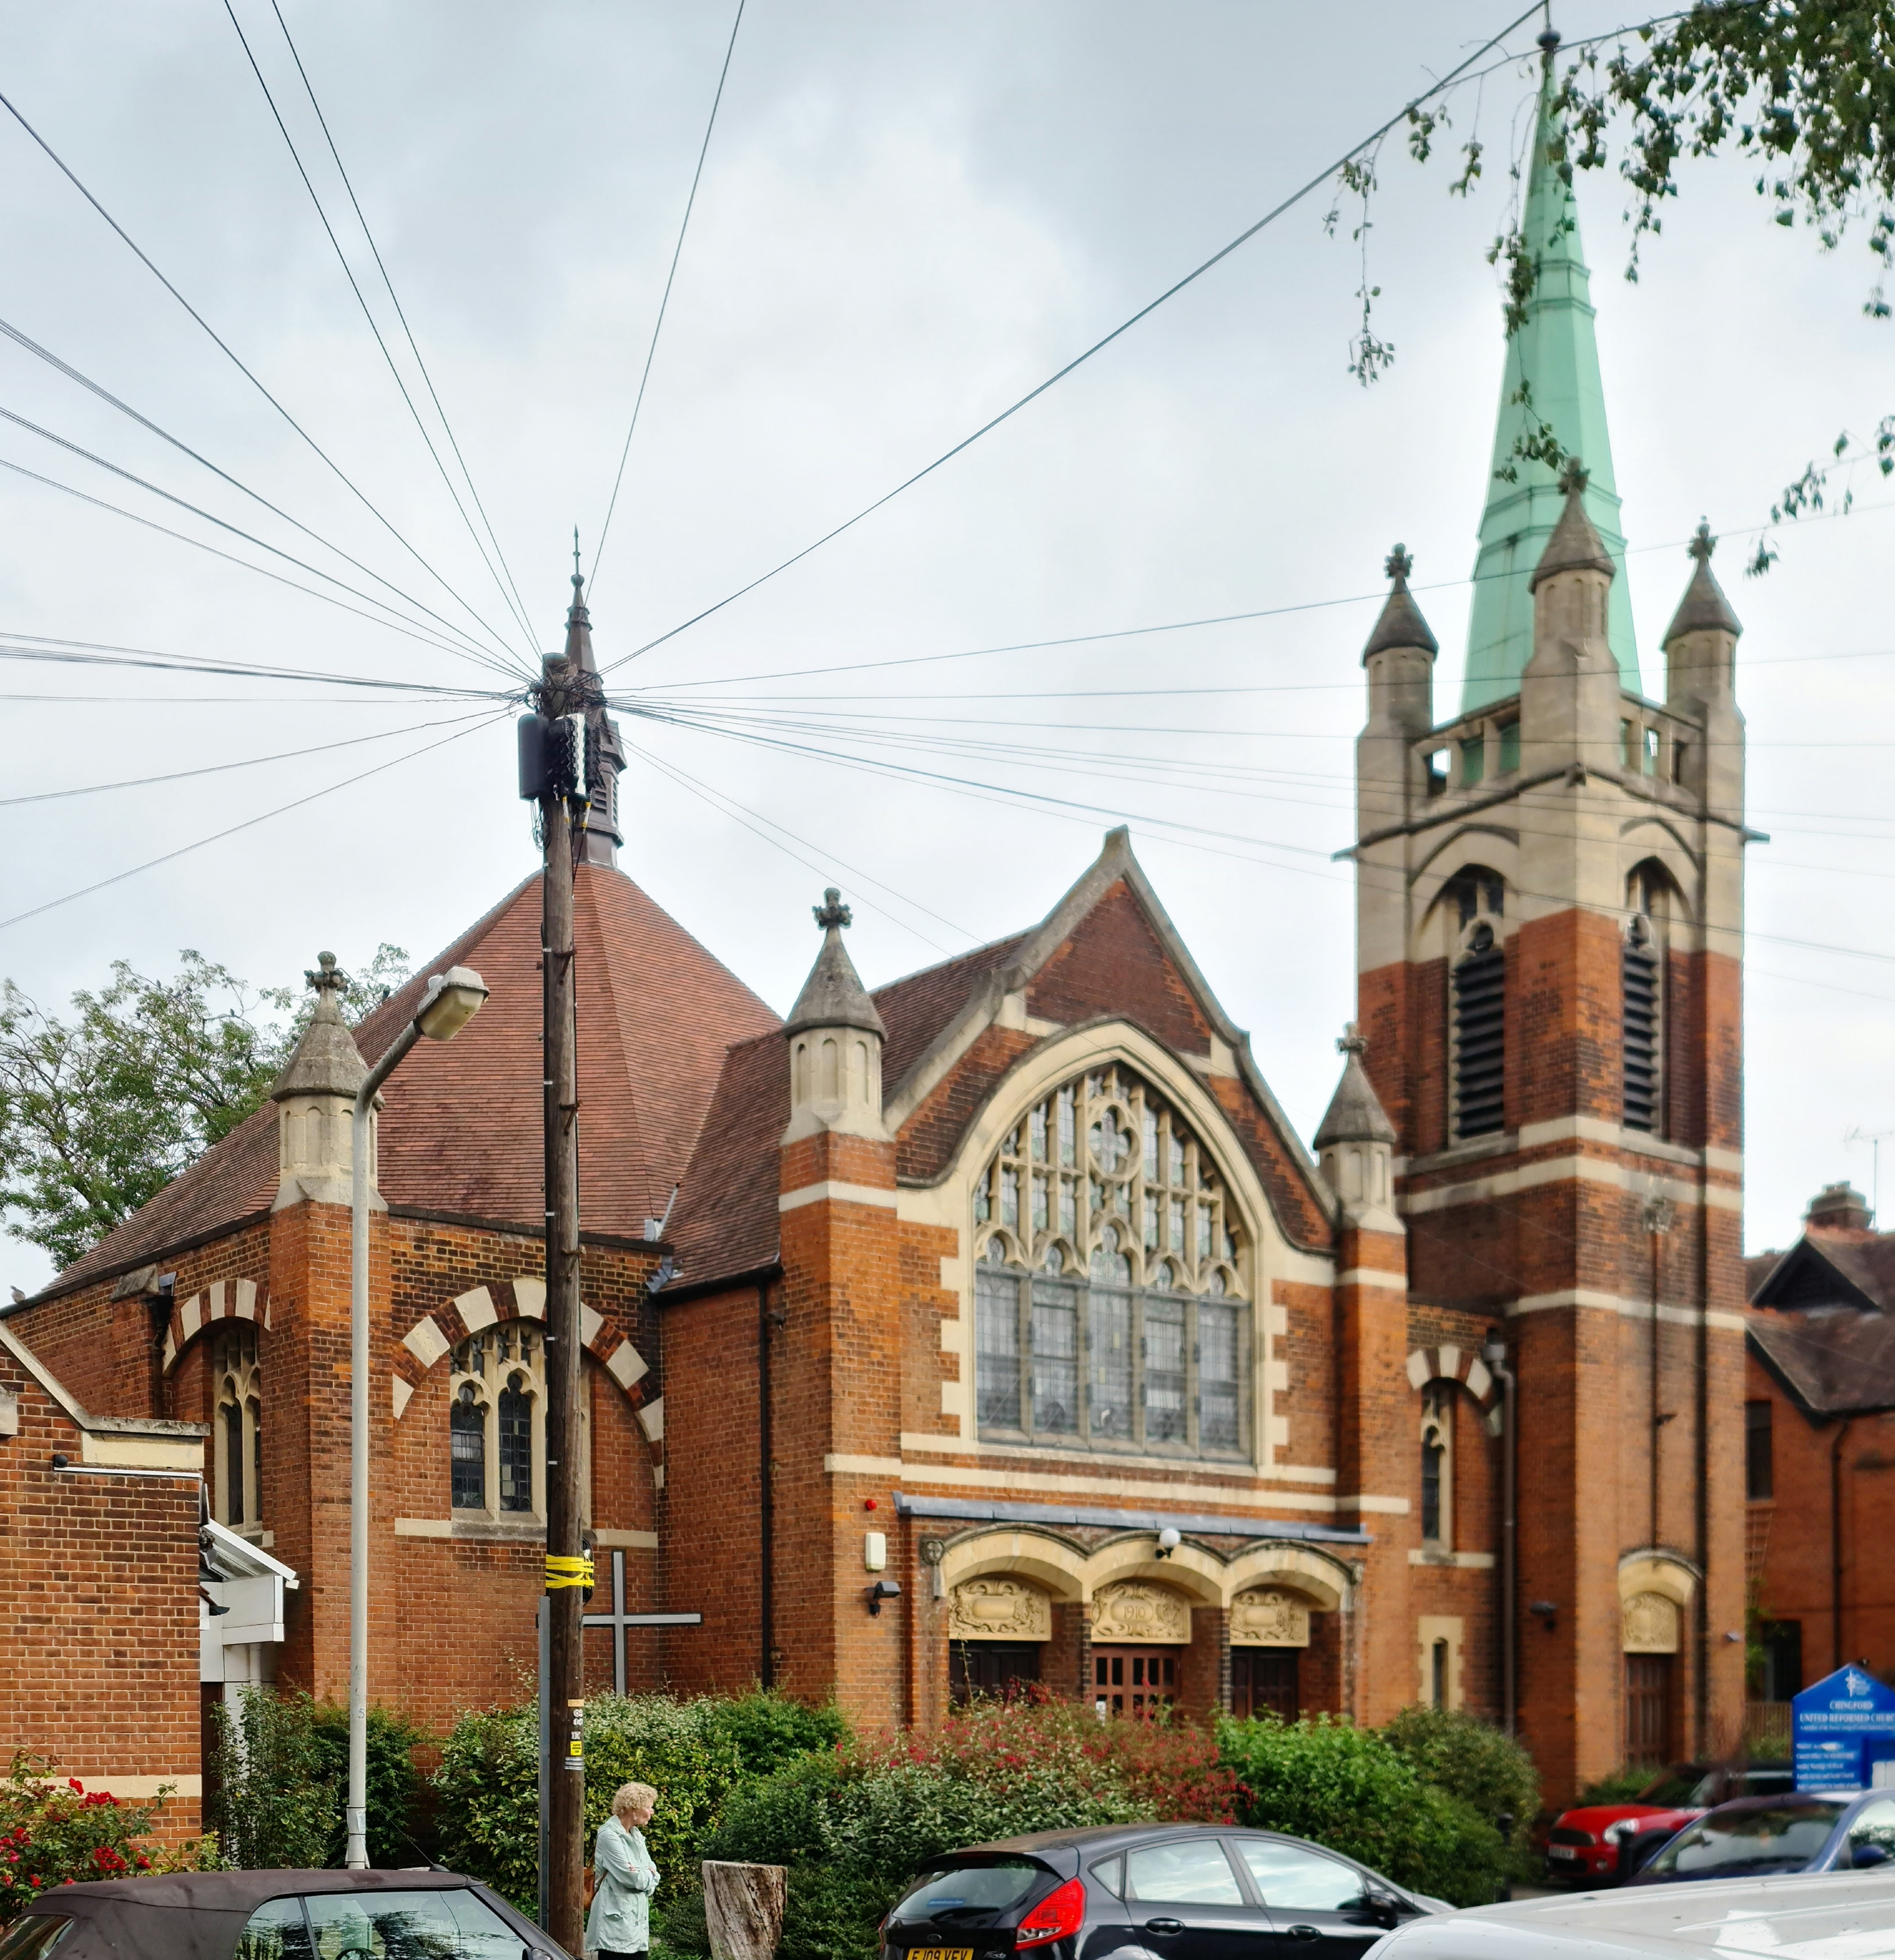 Chingford United Reformed Church